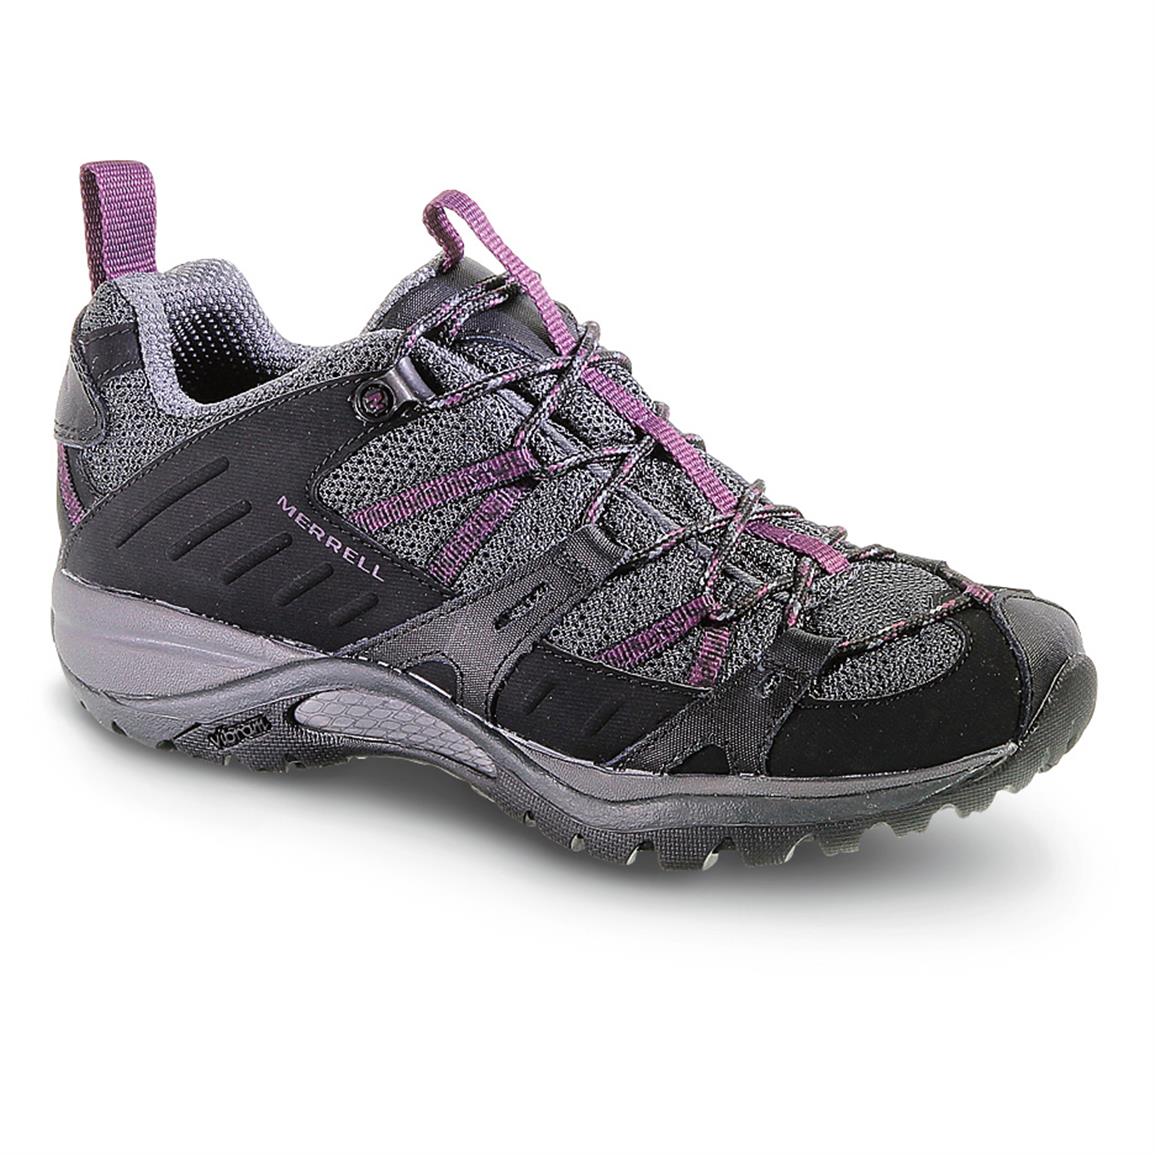 Women's MerrellÂ® Siren Sport II Water-resistant Hiking Shoes, Black ...